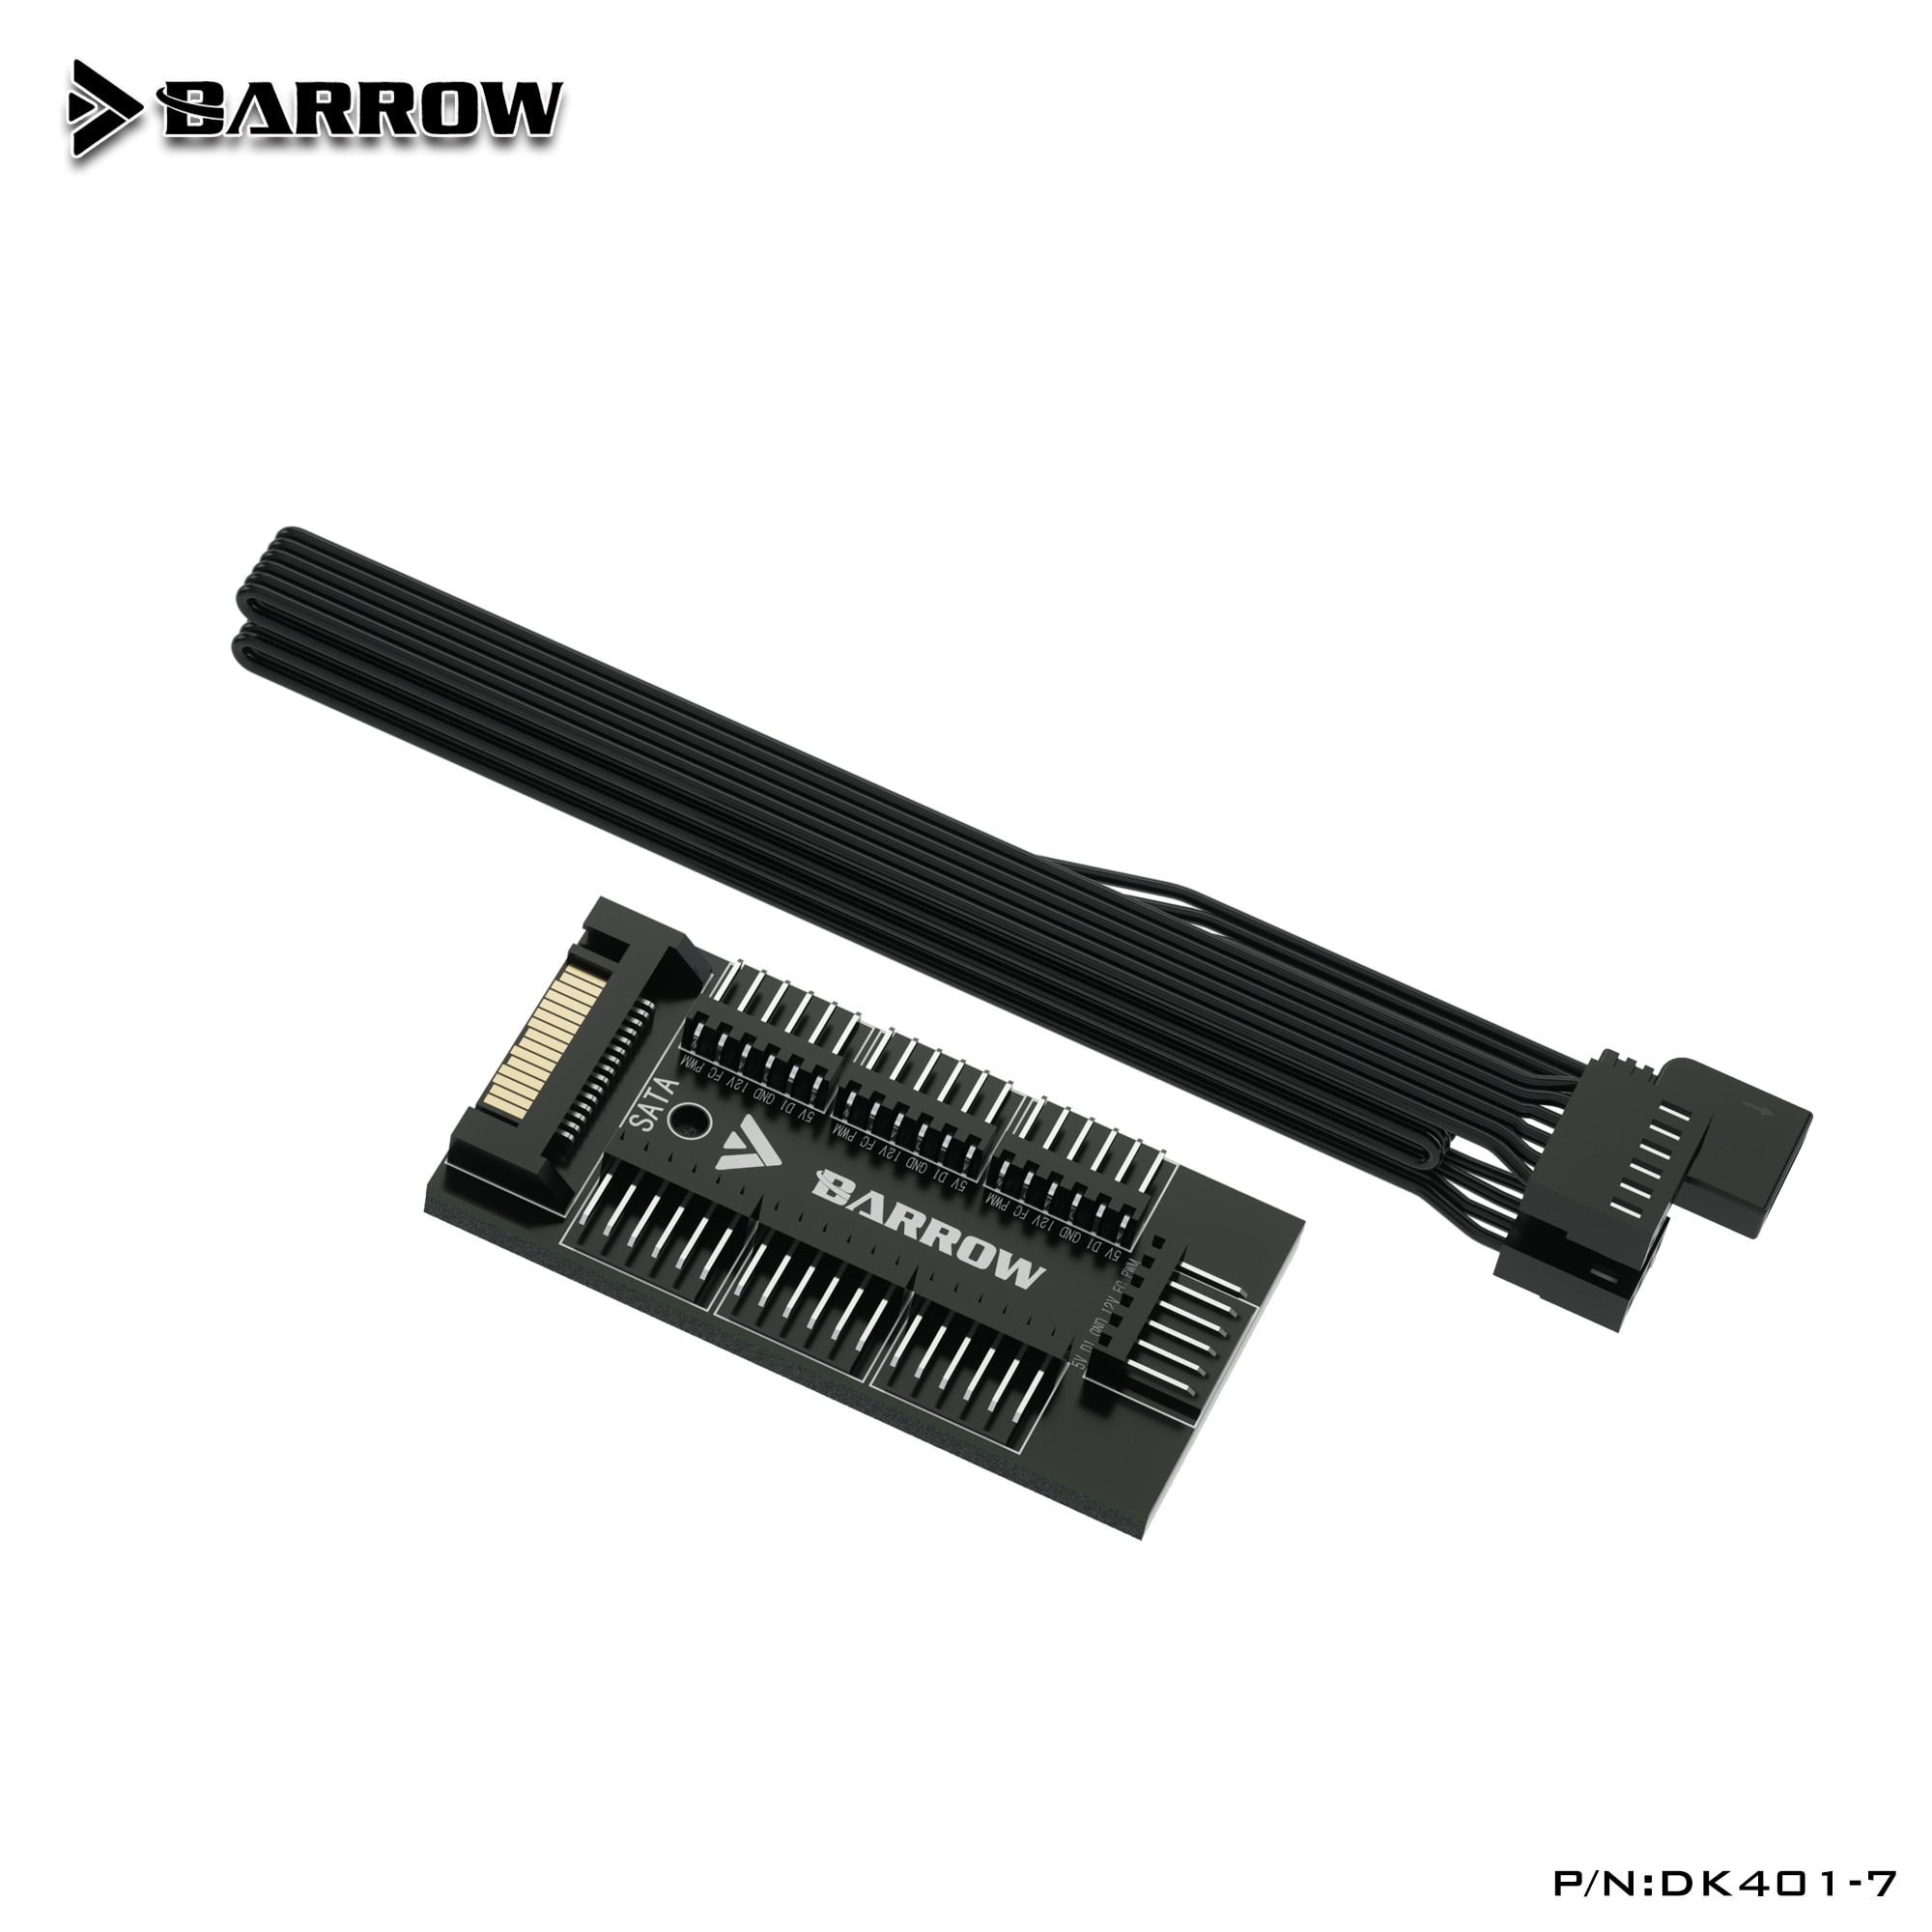 Customer favorite Barrow 7-Way Controllers Full Function Rgb And Fan Hub